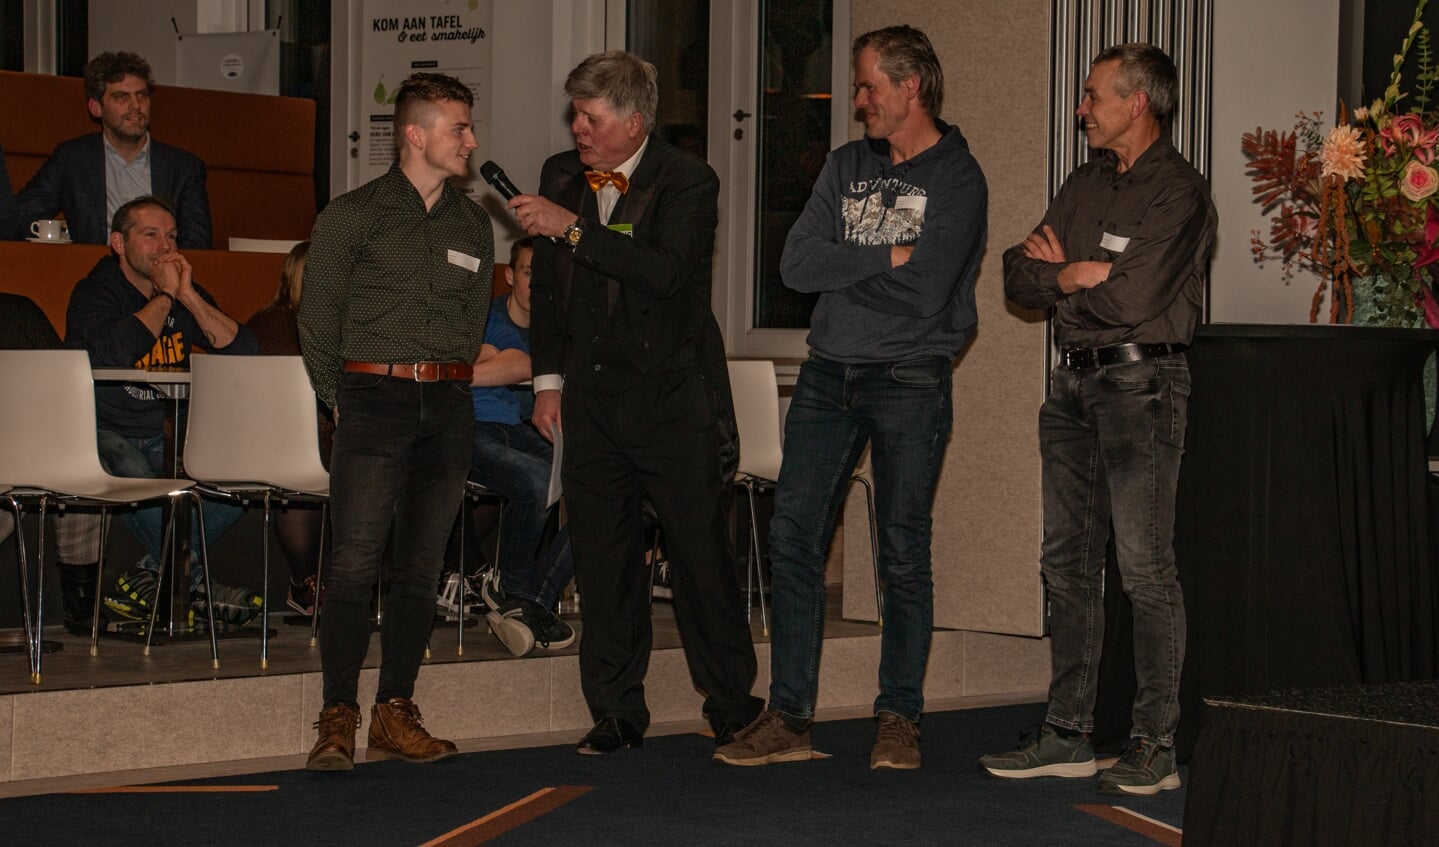 Touwtrekkers Richard Vliem, Ard Reinders en Gert Jan Vliem. Foto: Liesbeth Spaansen